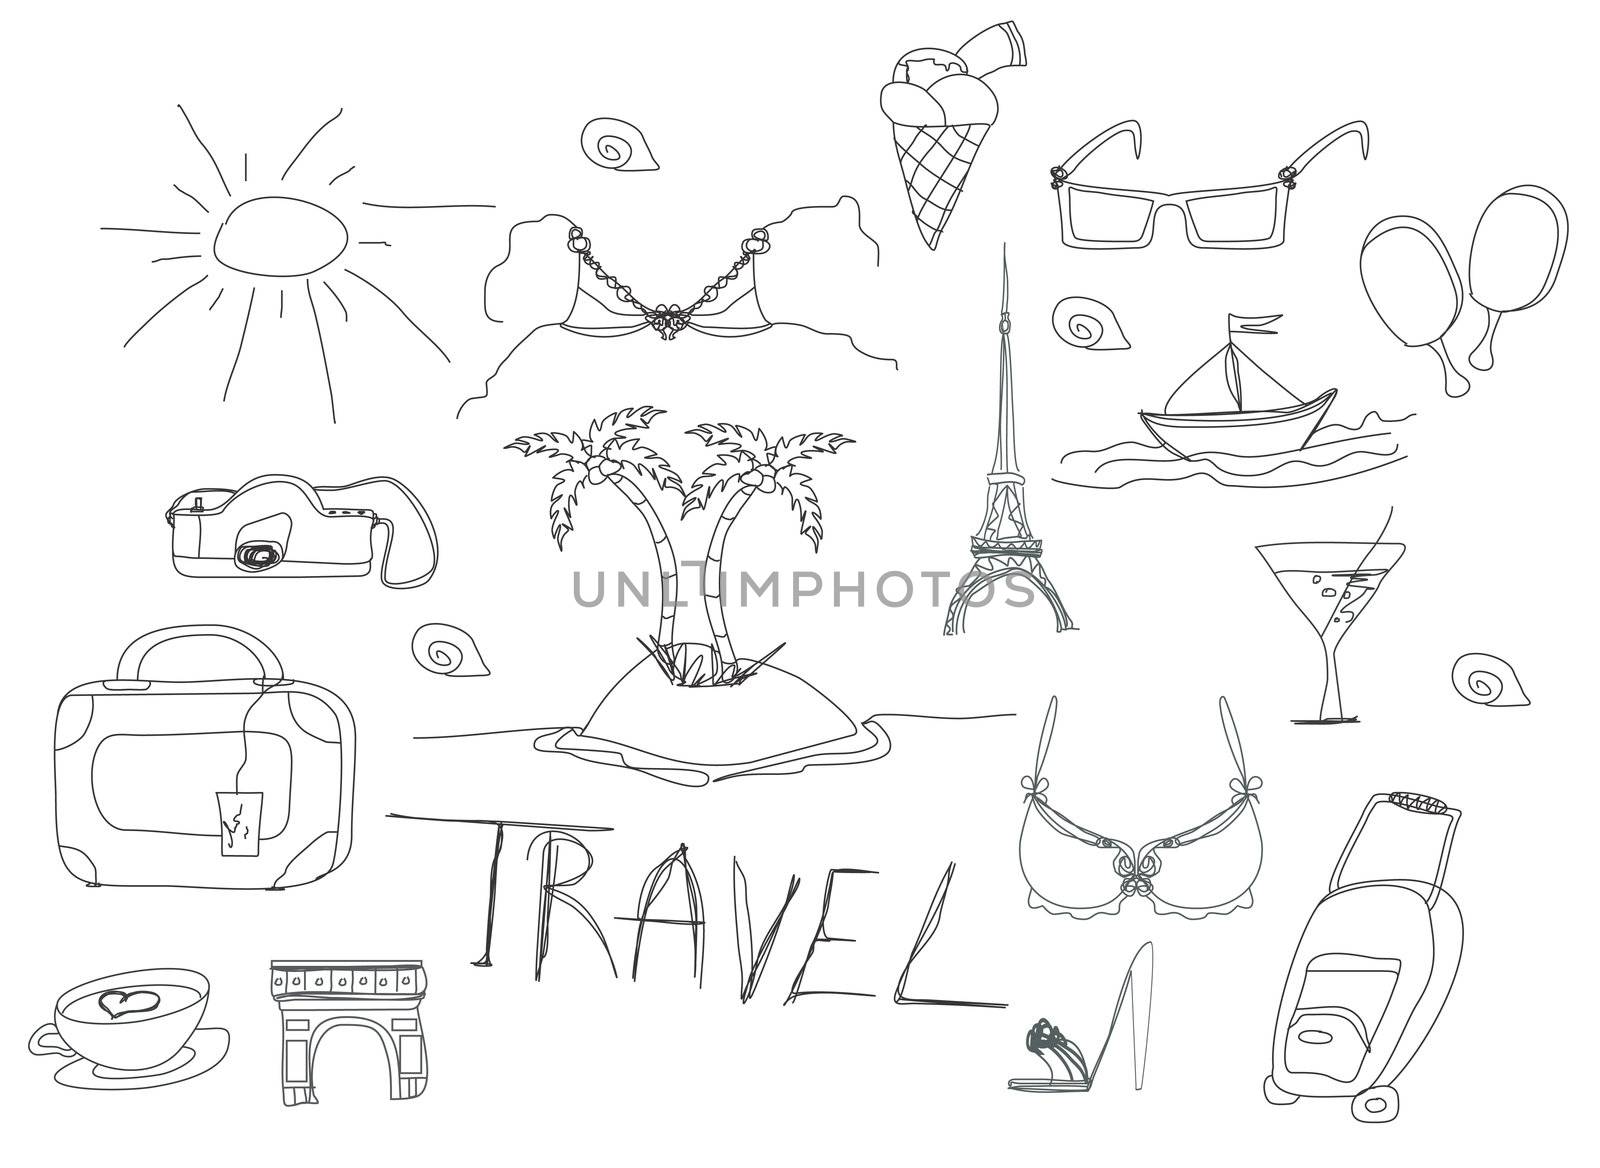 Hand drawn travel doodles. Vector illustration.